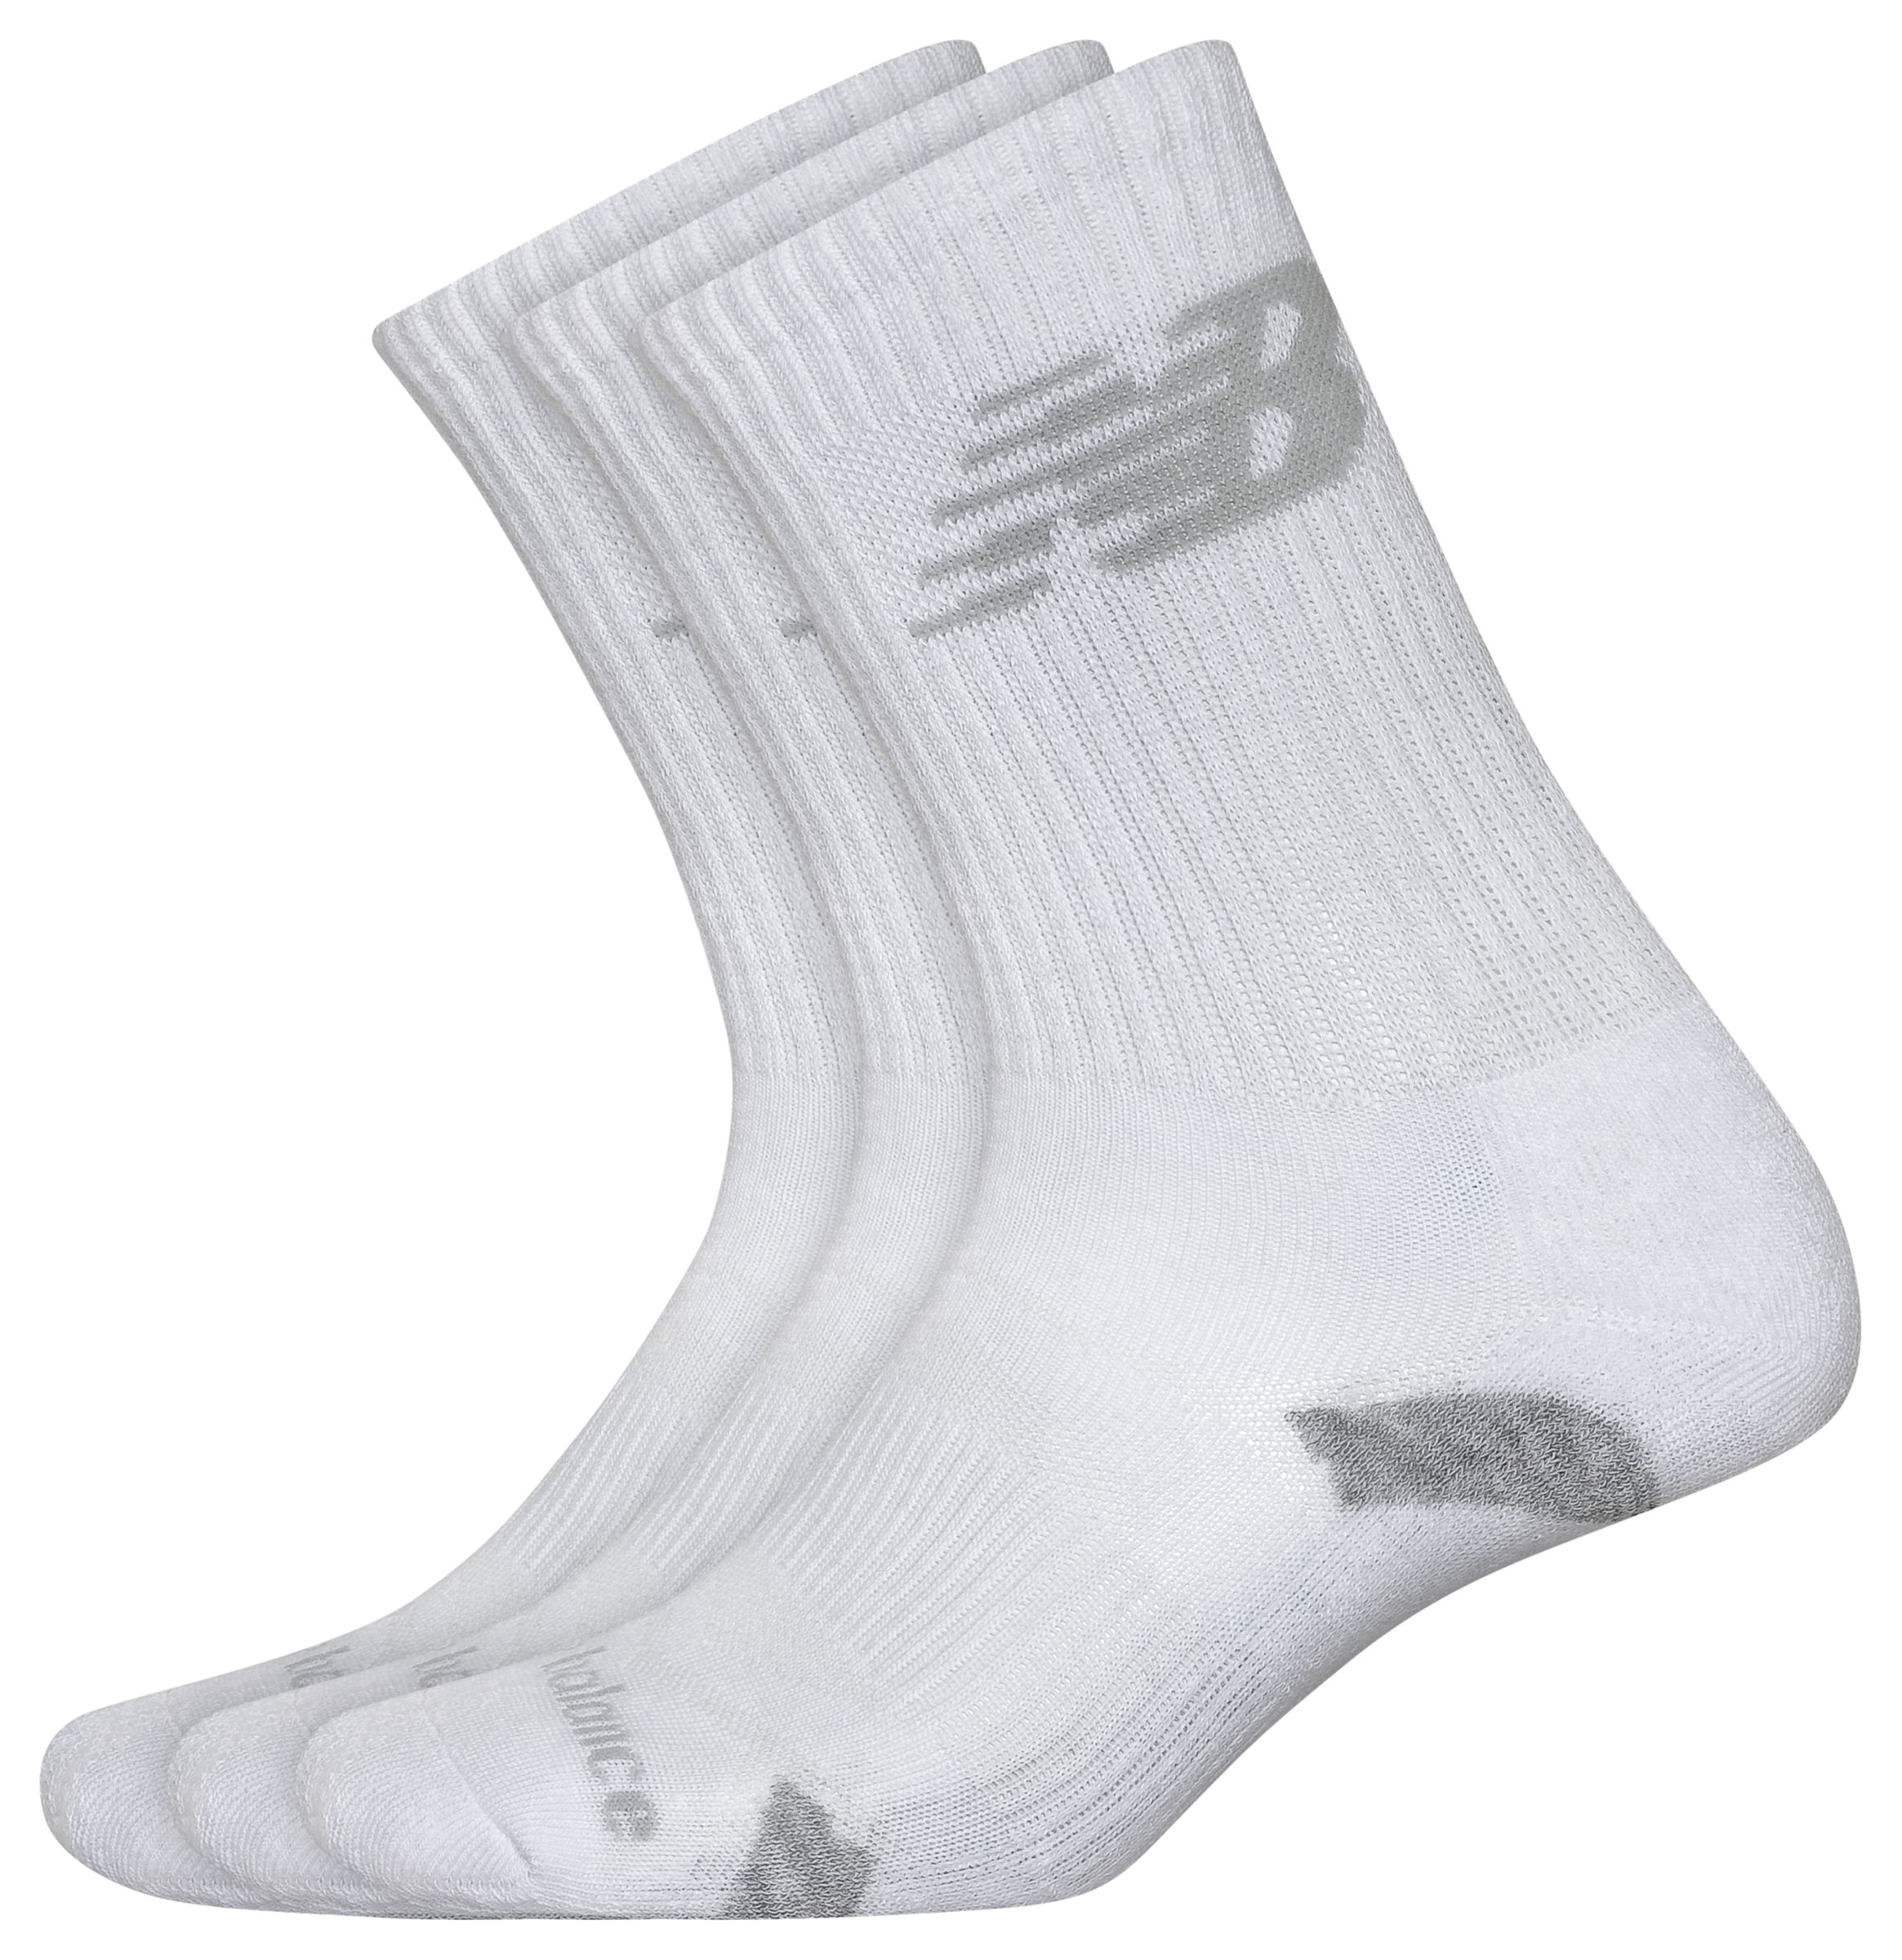 Athletic \u0026 Casual Socks - New Balance